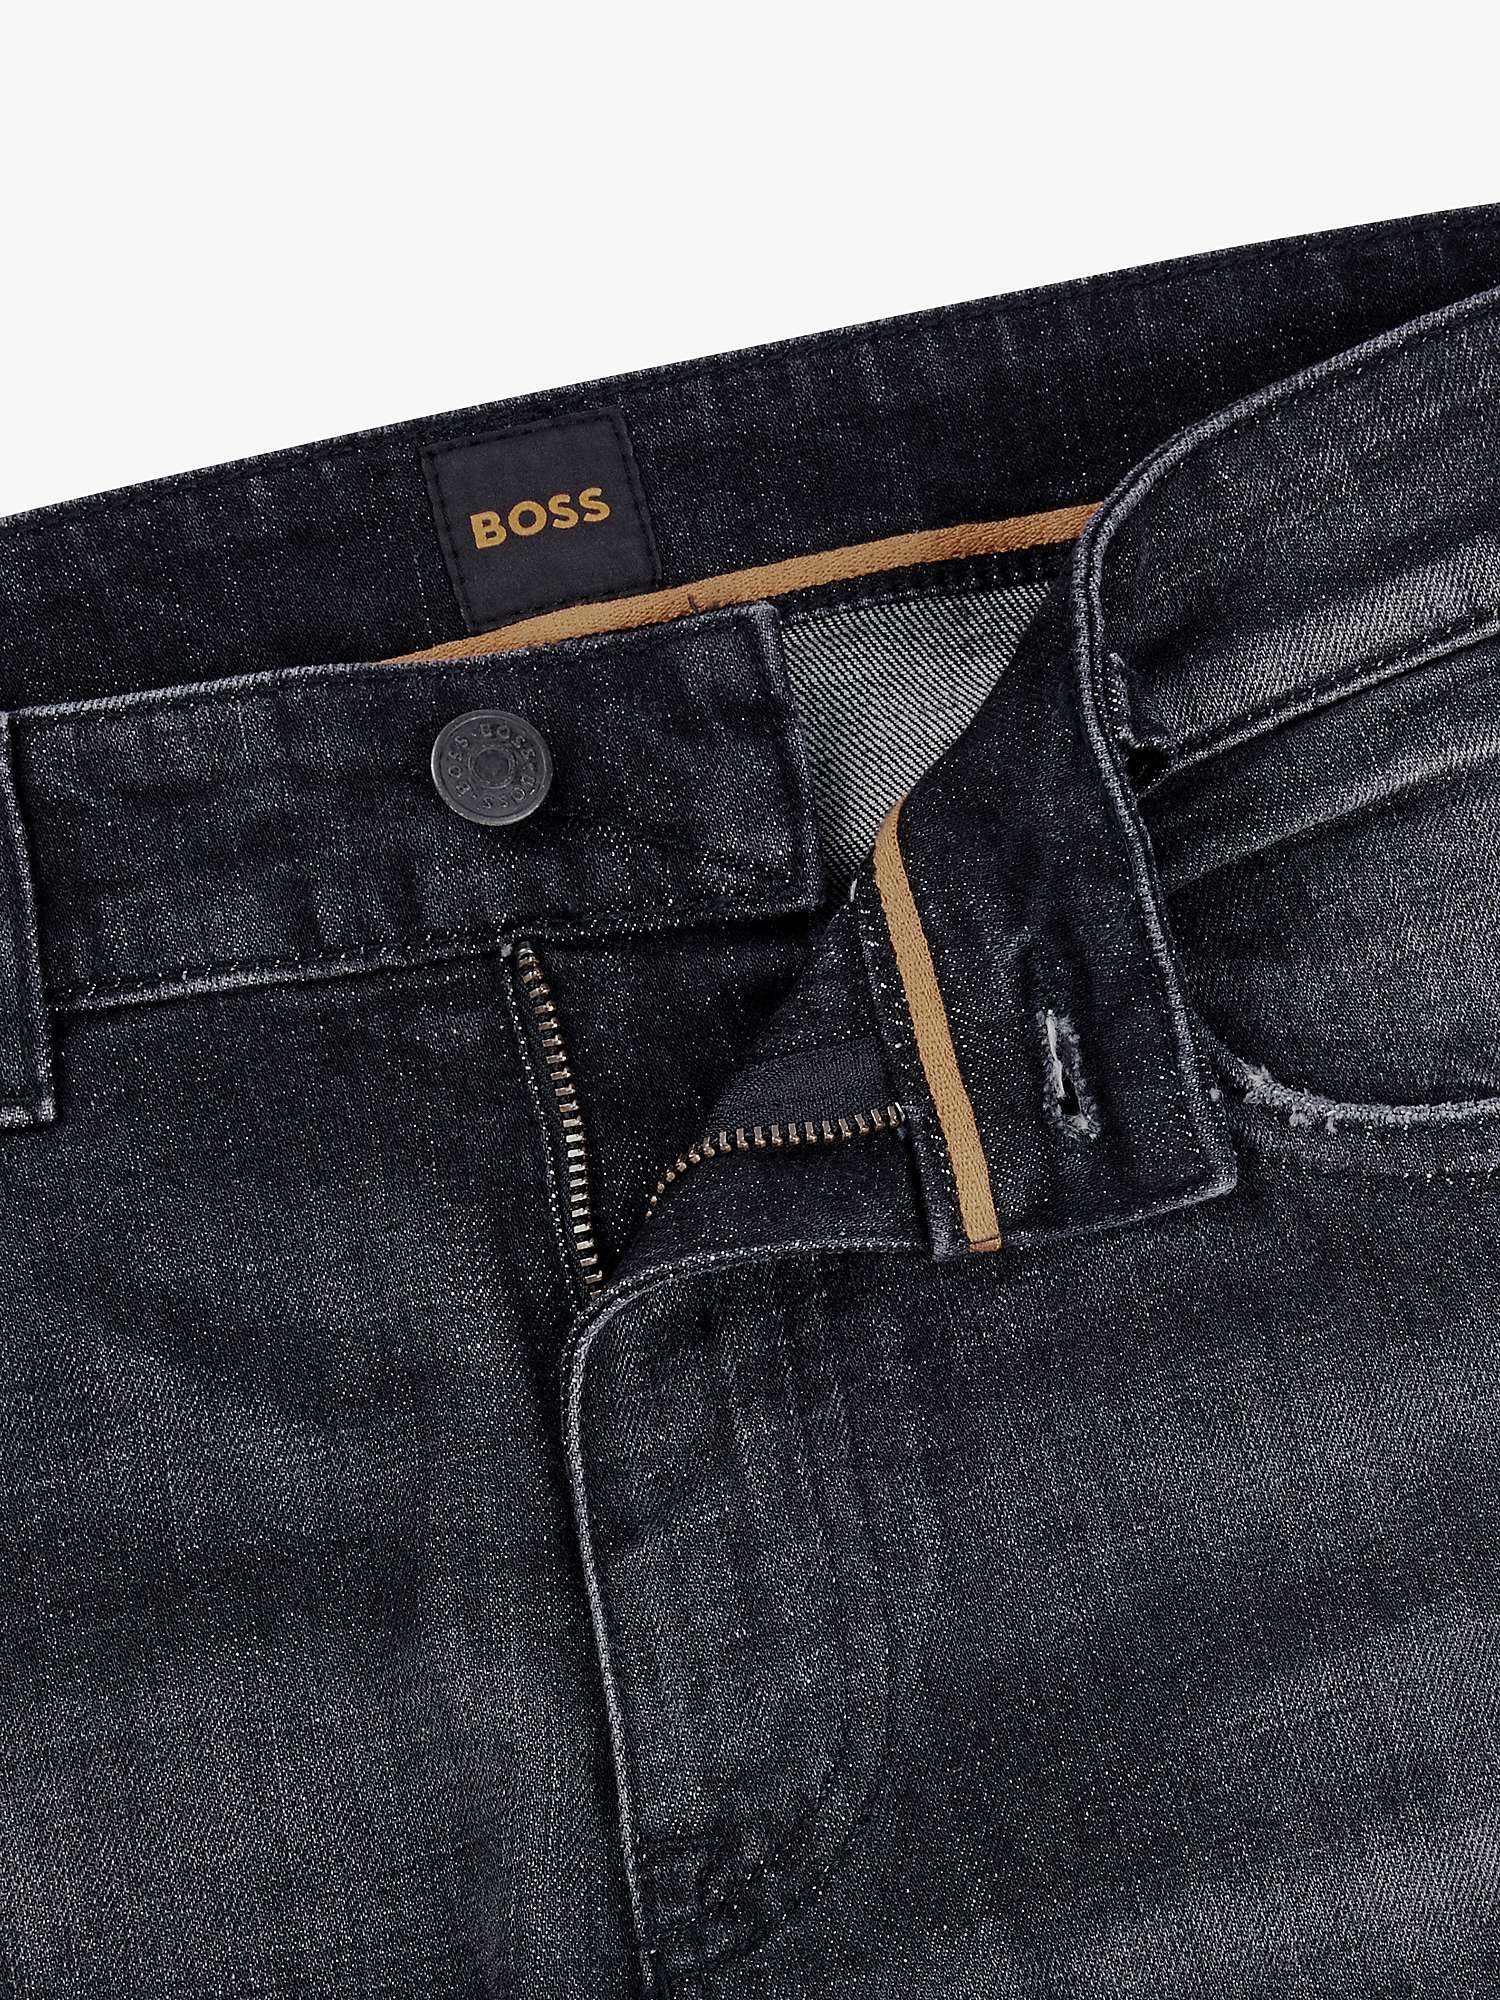 Buy BOSS Delware Denim Jeans, Charcoal Online at johnlewis.com